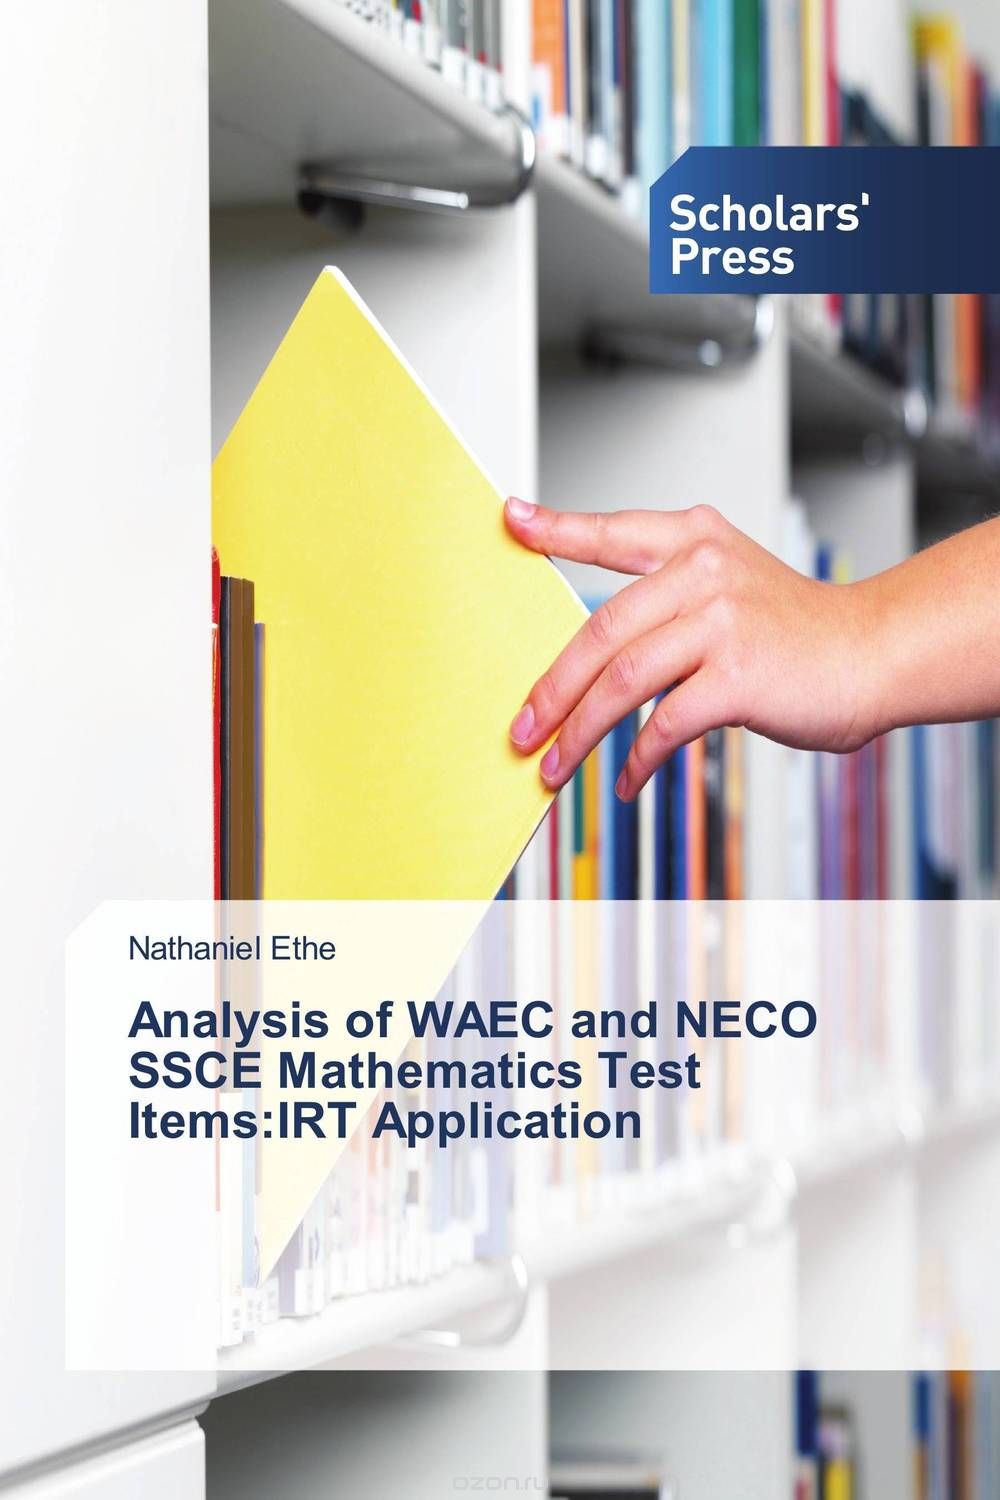 Скачать книгу "Analysis of WAEC and NECO SSCE Mathematics Test Items:IRT Application"